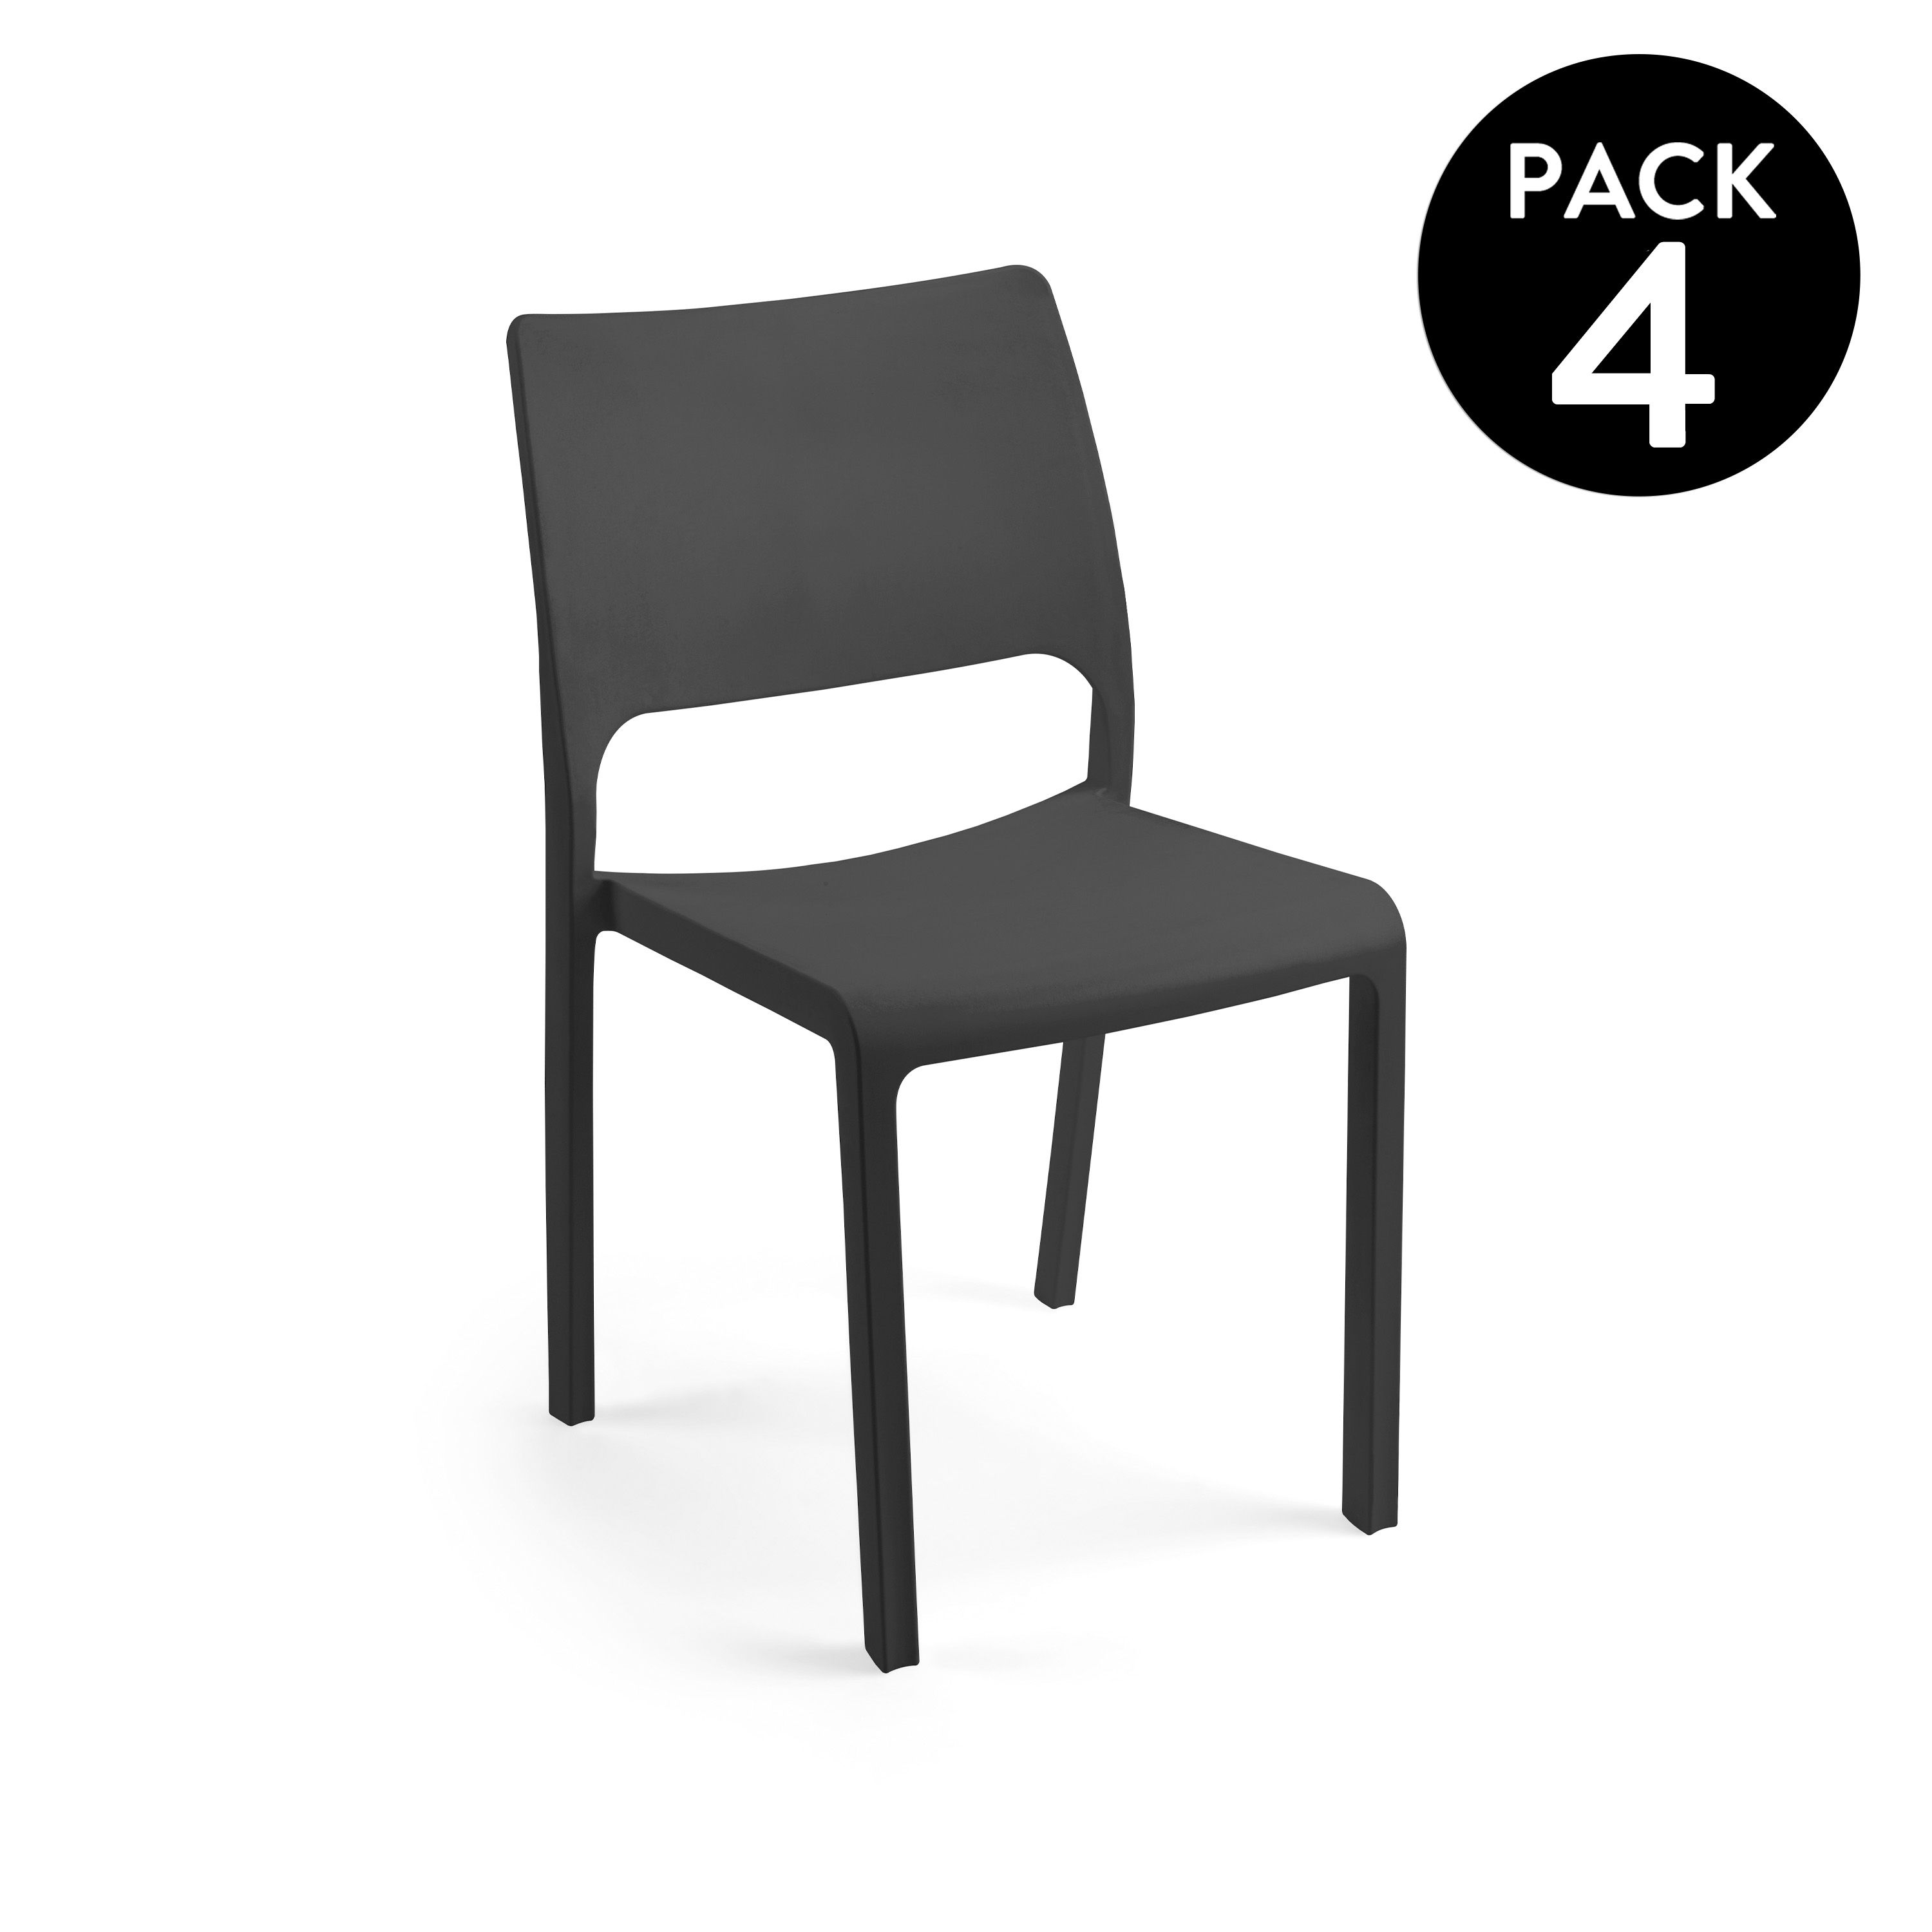 Pack 4 sillas de exterior Shine